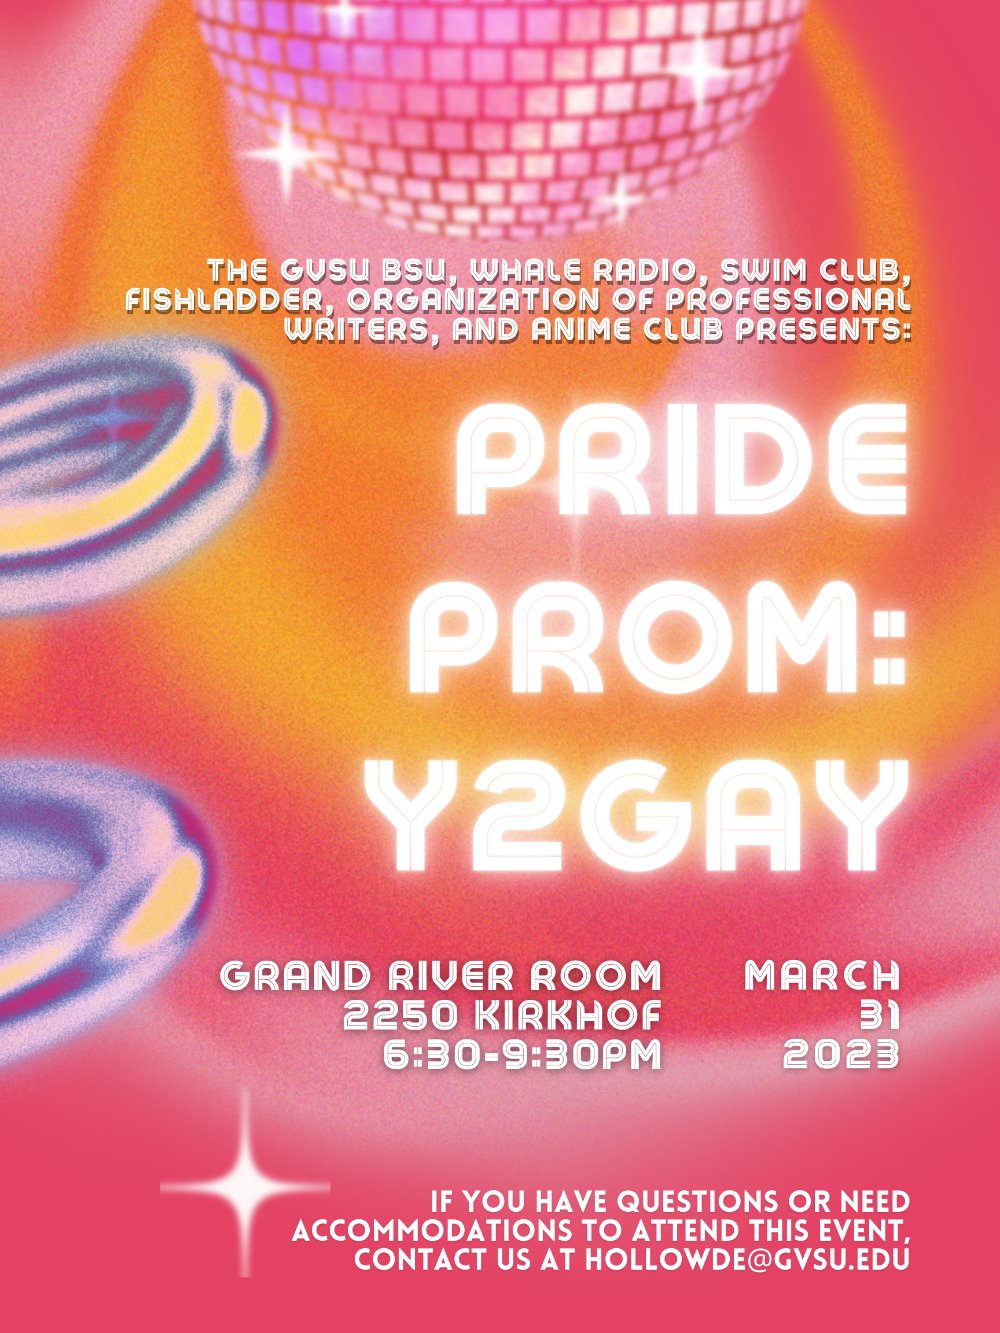 The GVSU BSU, Whale Radio, Swim Club, Fishladder, Organization of Professional Writers, and Anime club presents: Pride Prom: Y2Gay! Grand River Room, 2250 Kirkhof, 6:30-9:30Pm, March 31, 2023.